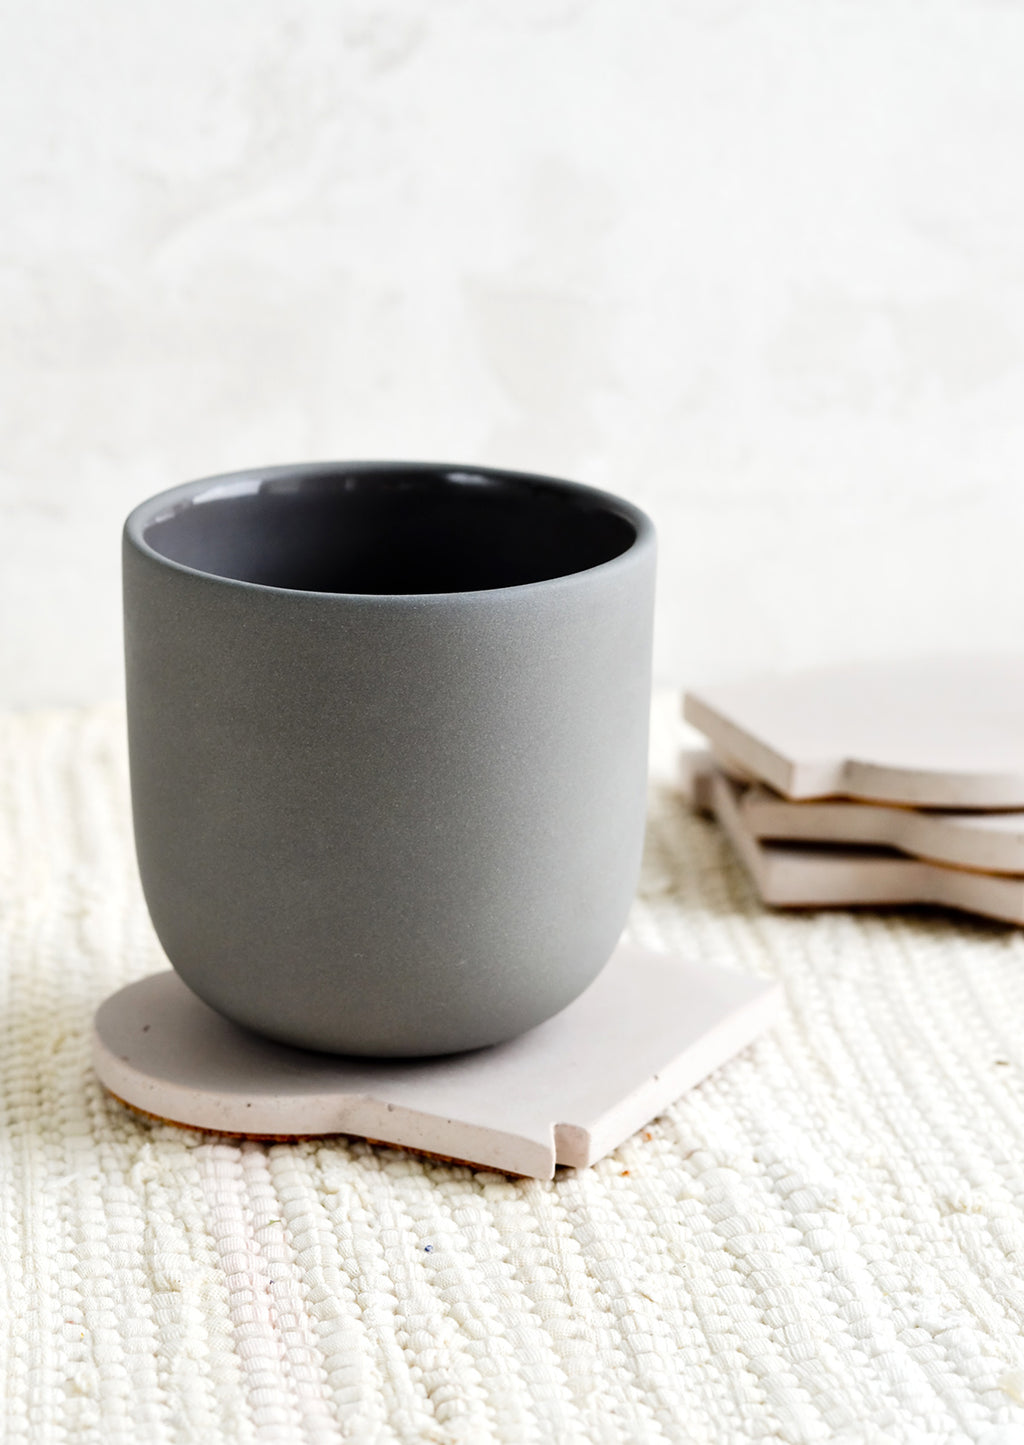 Pale Mauve: A ceramic cup on top of a coaster.